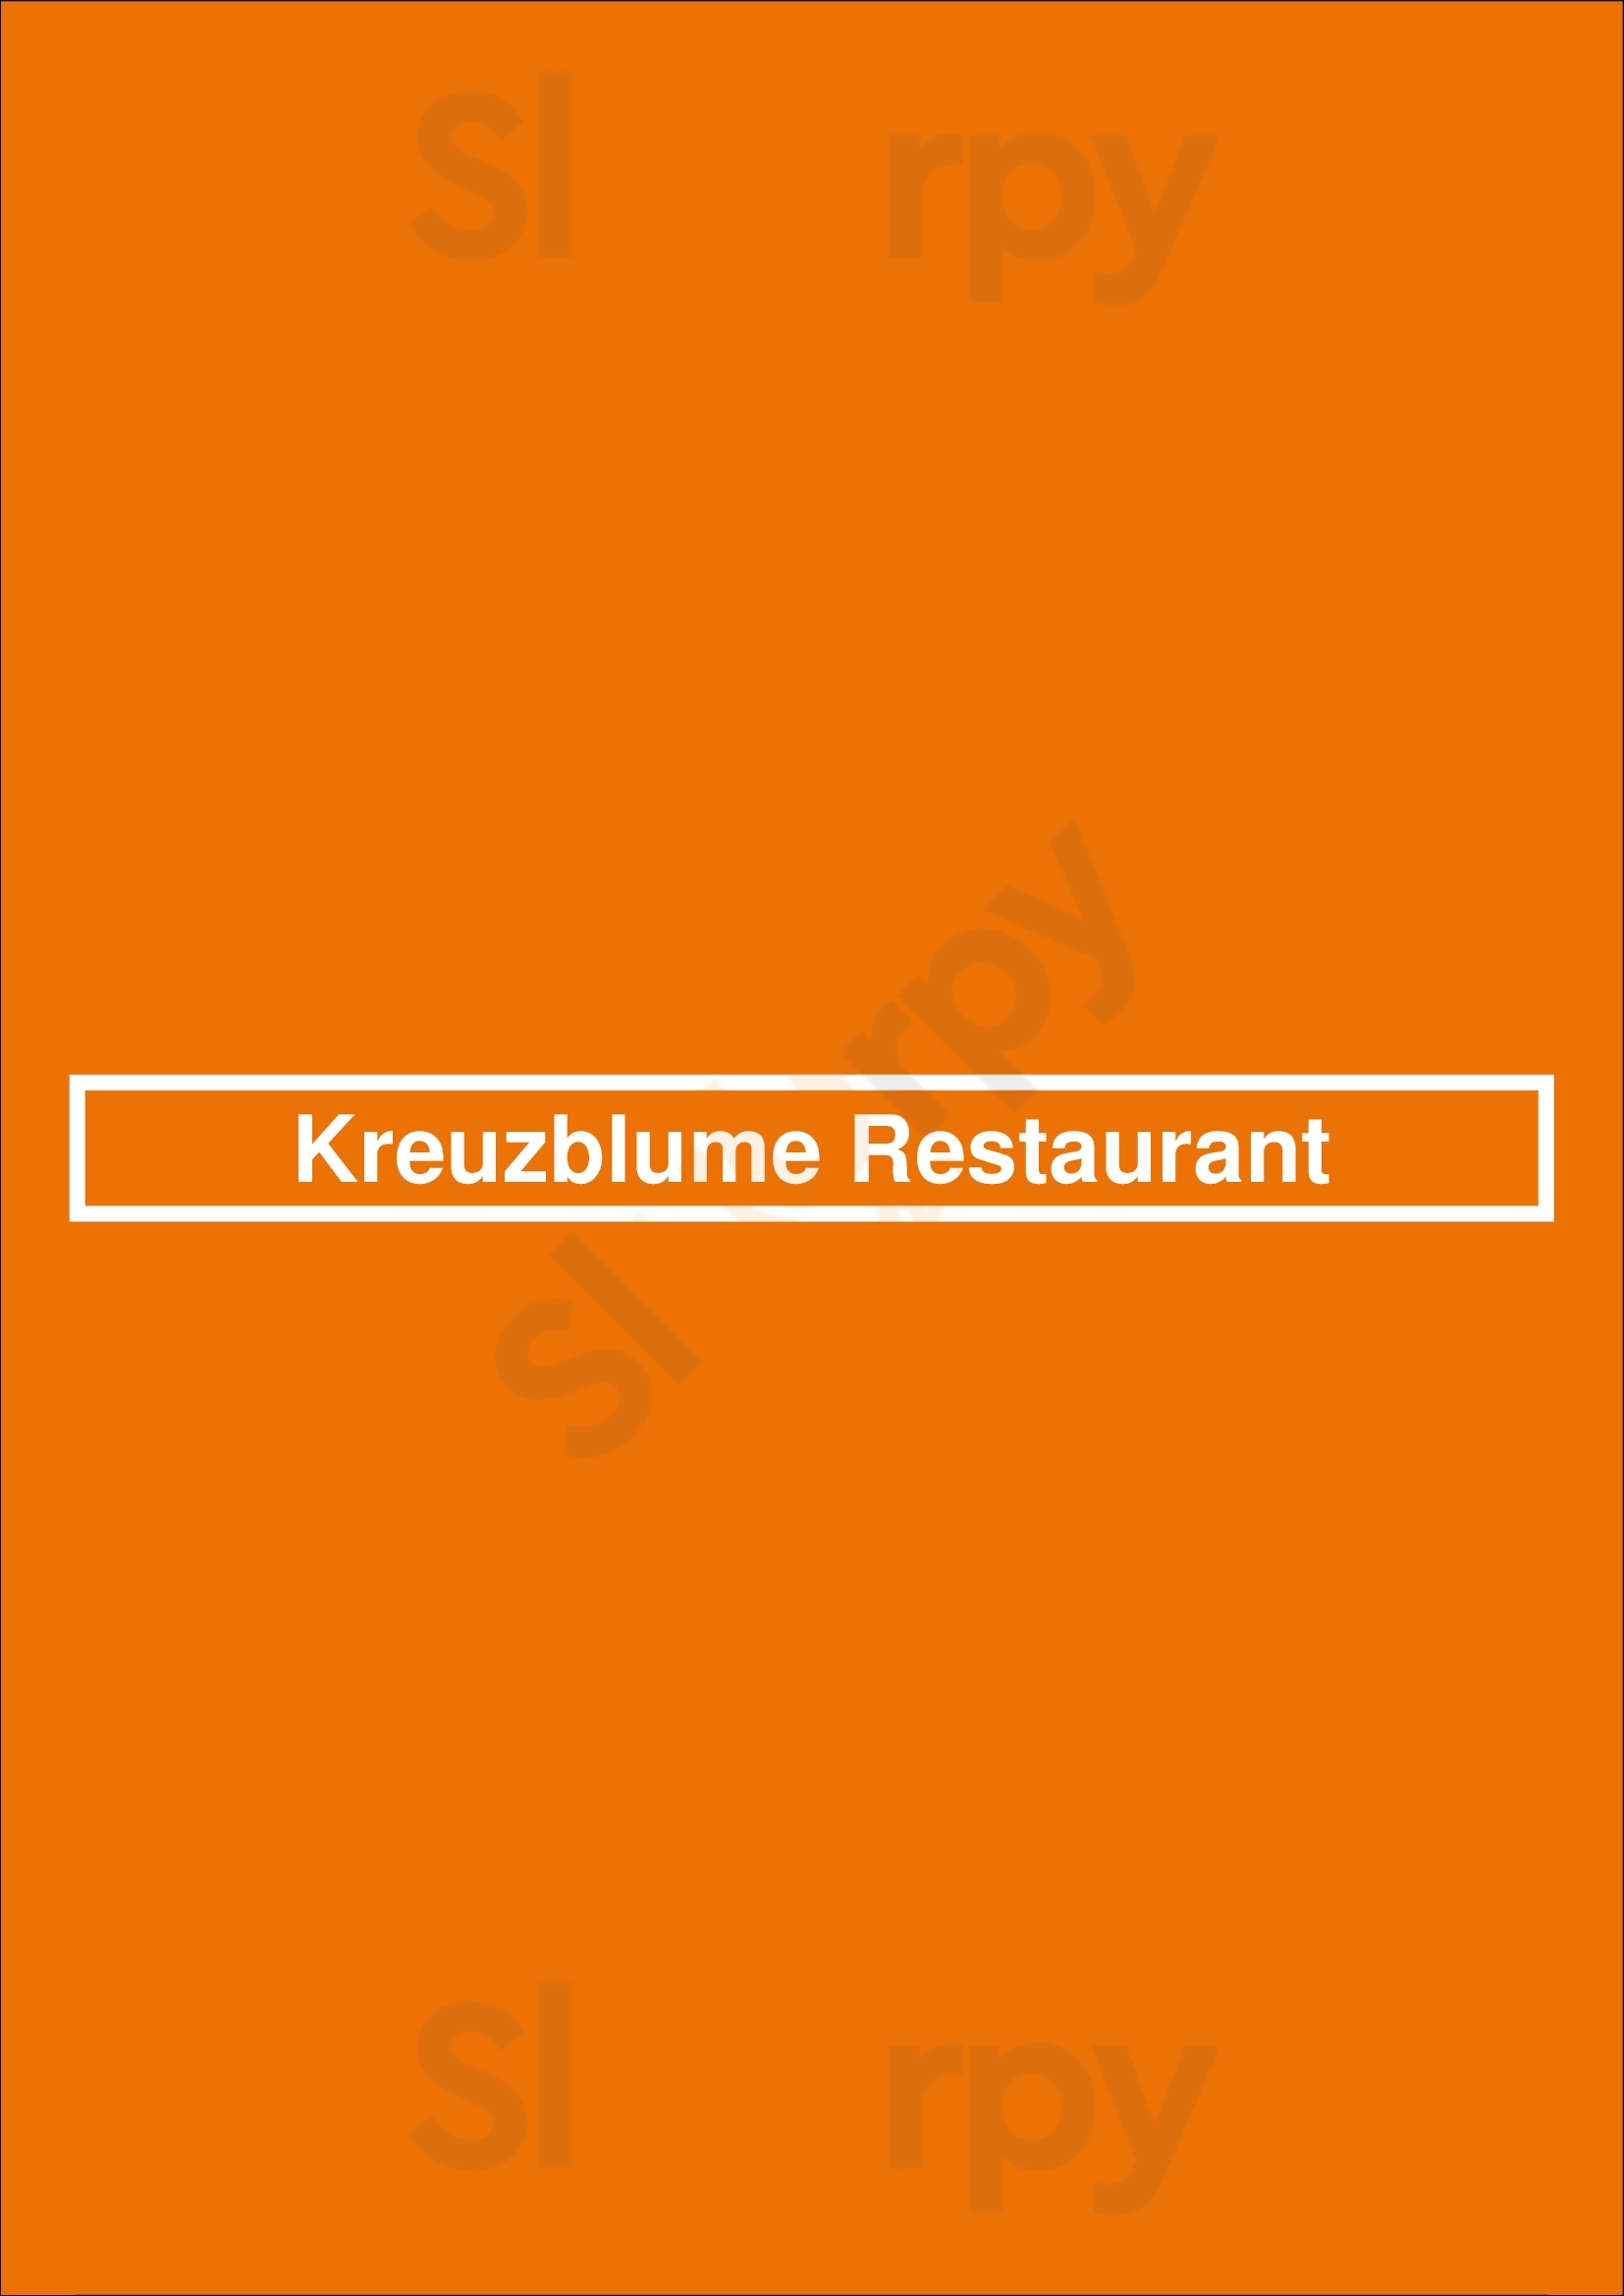 Kreuzblume Restaurant Freiburg Menu - 1